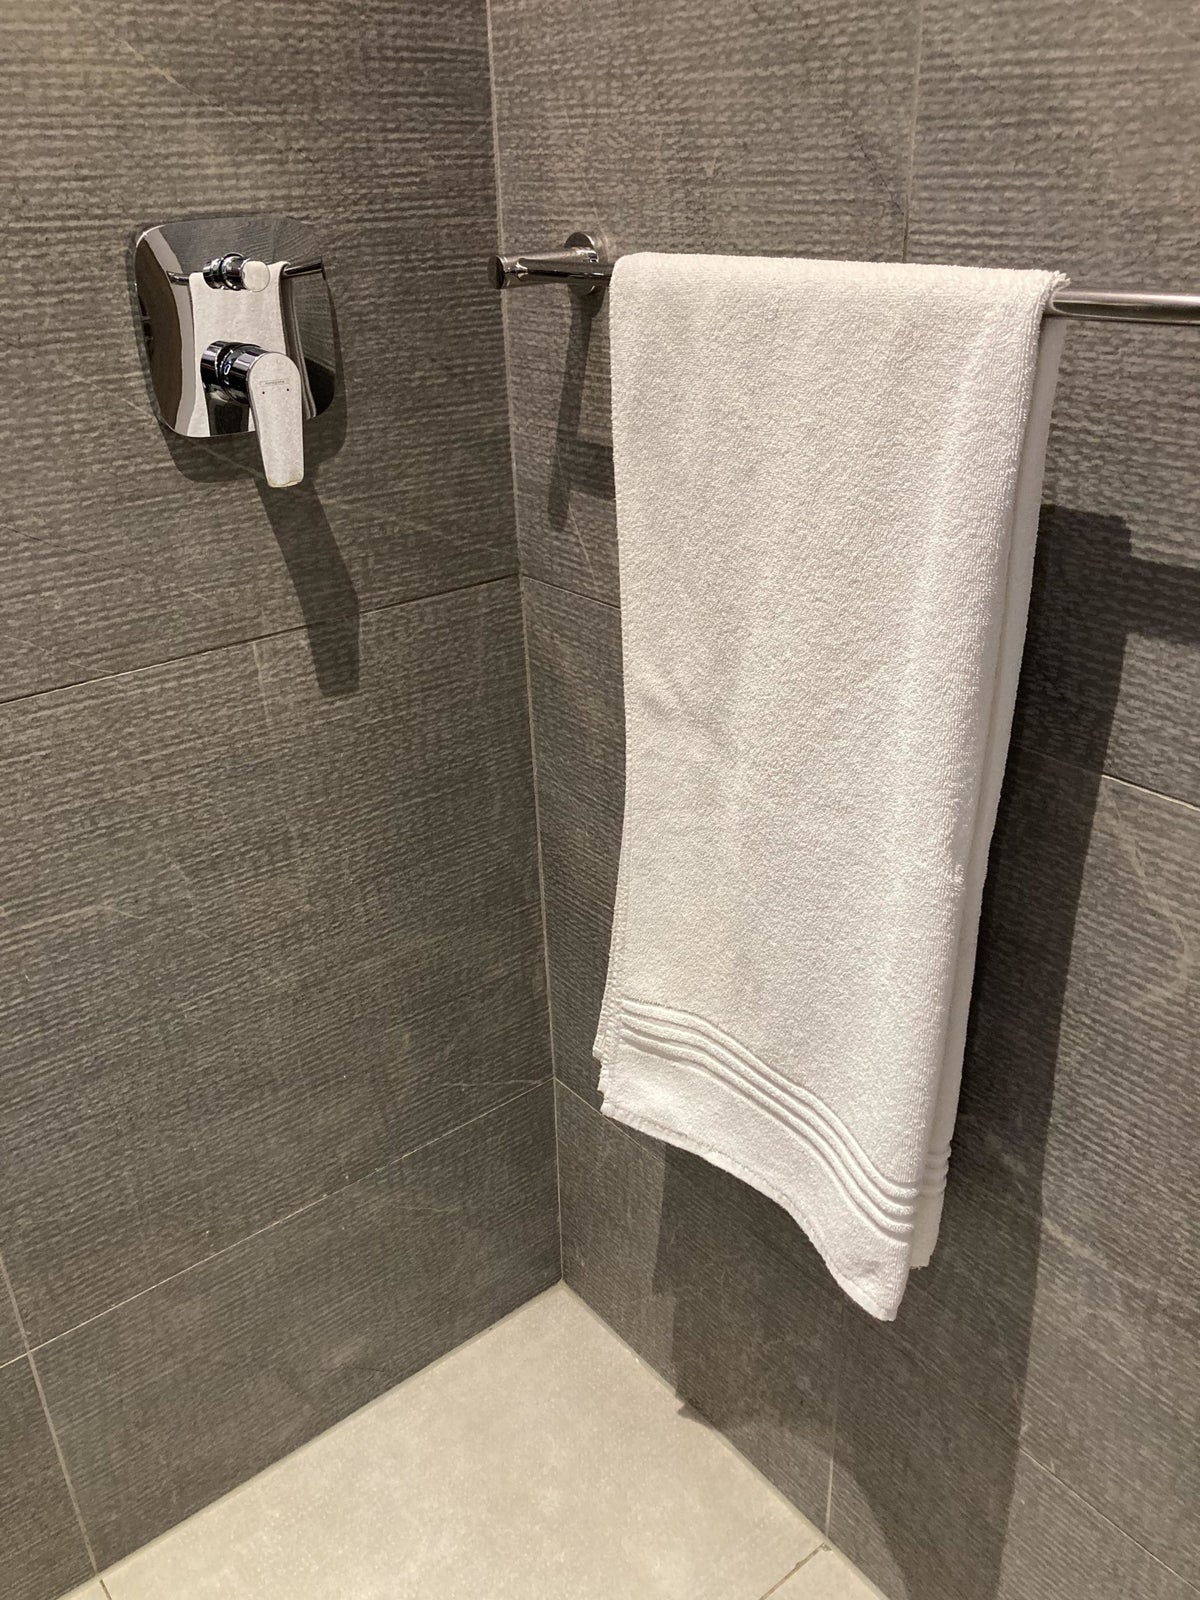 Johannesburg Marriott Hotel Melrose Arch in shower towel controls